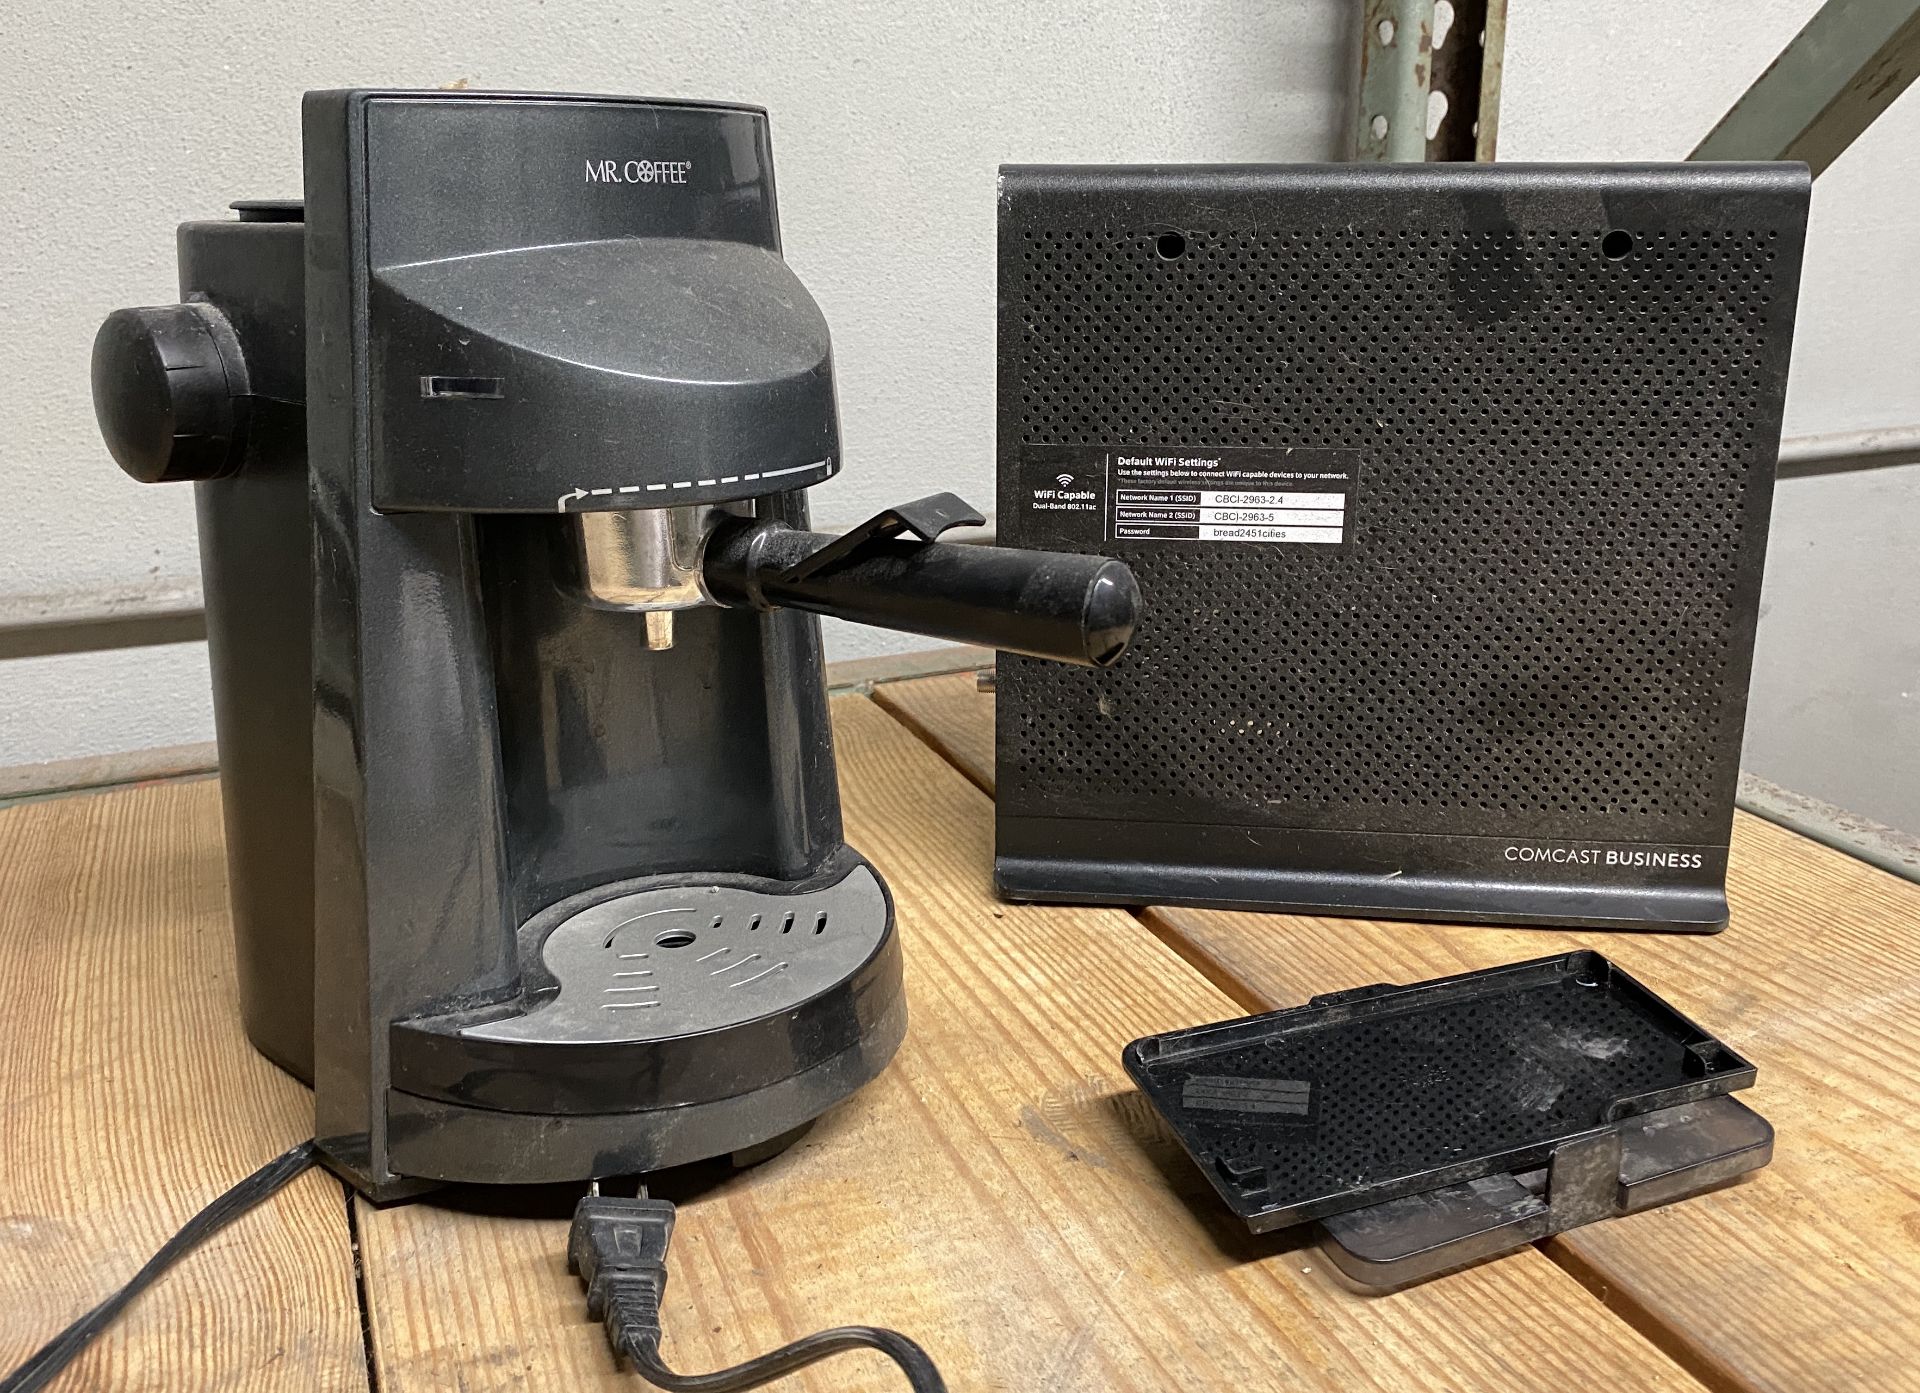 MR. COFFEE COFFEE MACHINE & COMCAST BUSINESS WIWI MODEM - Image 3 of 4